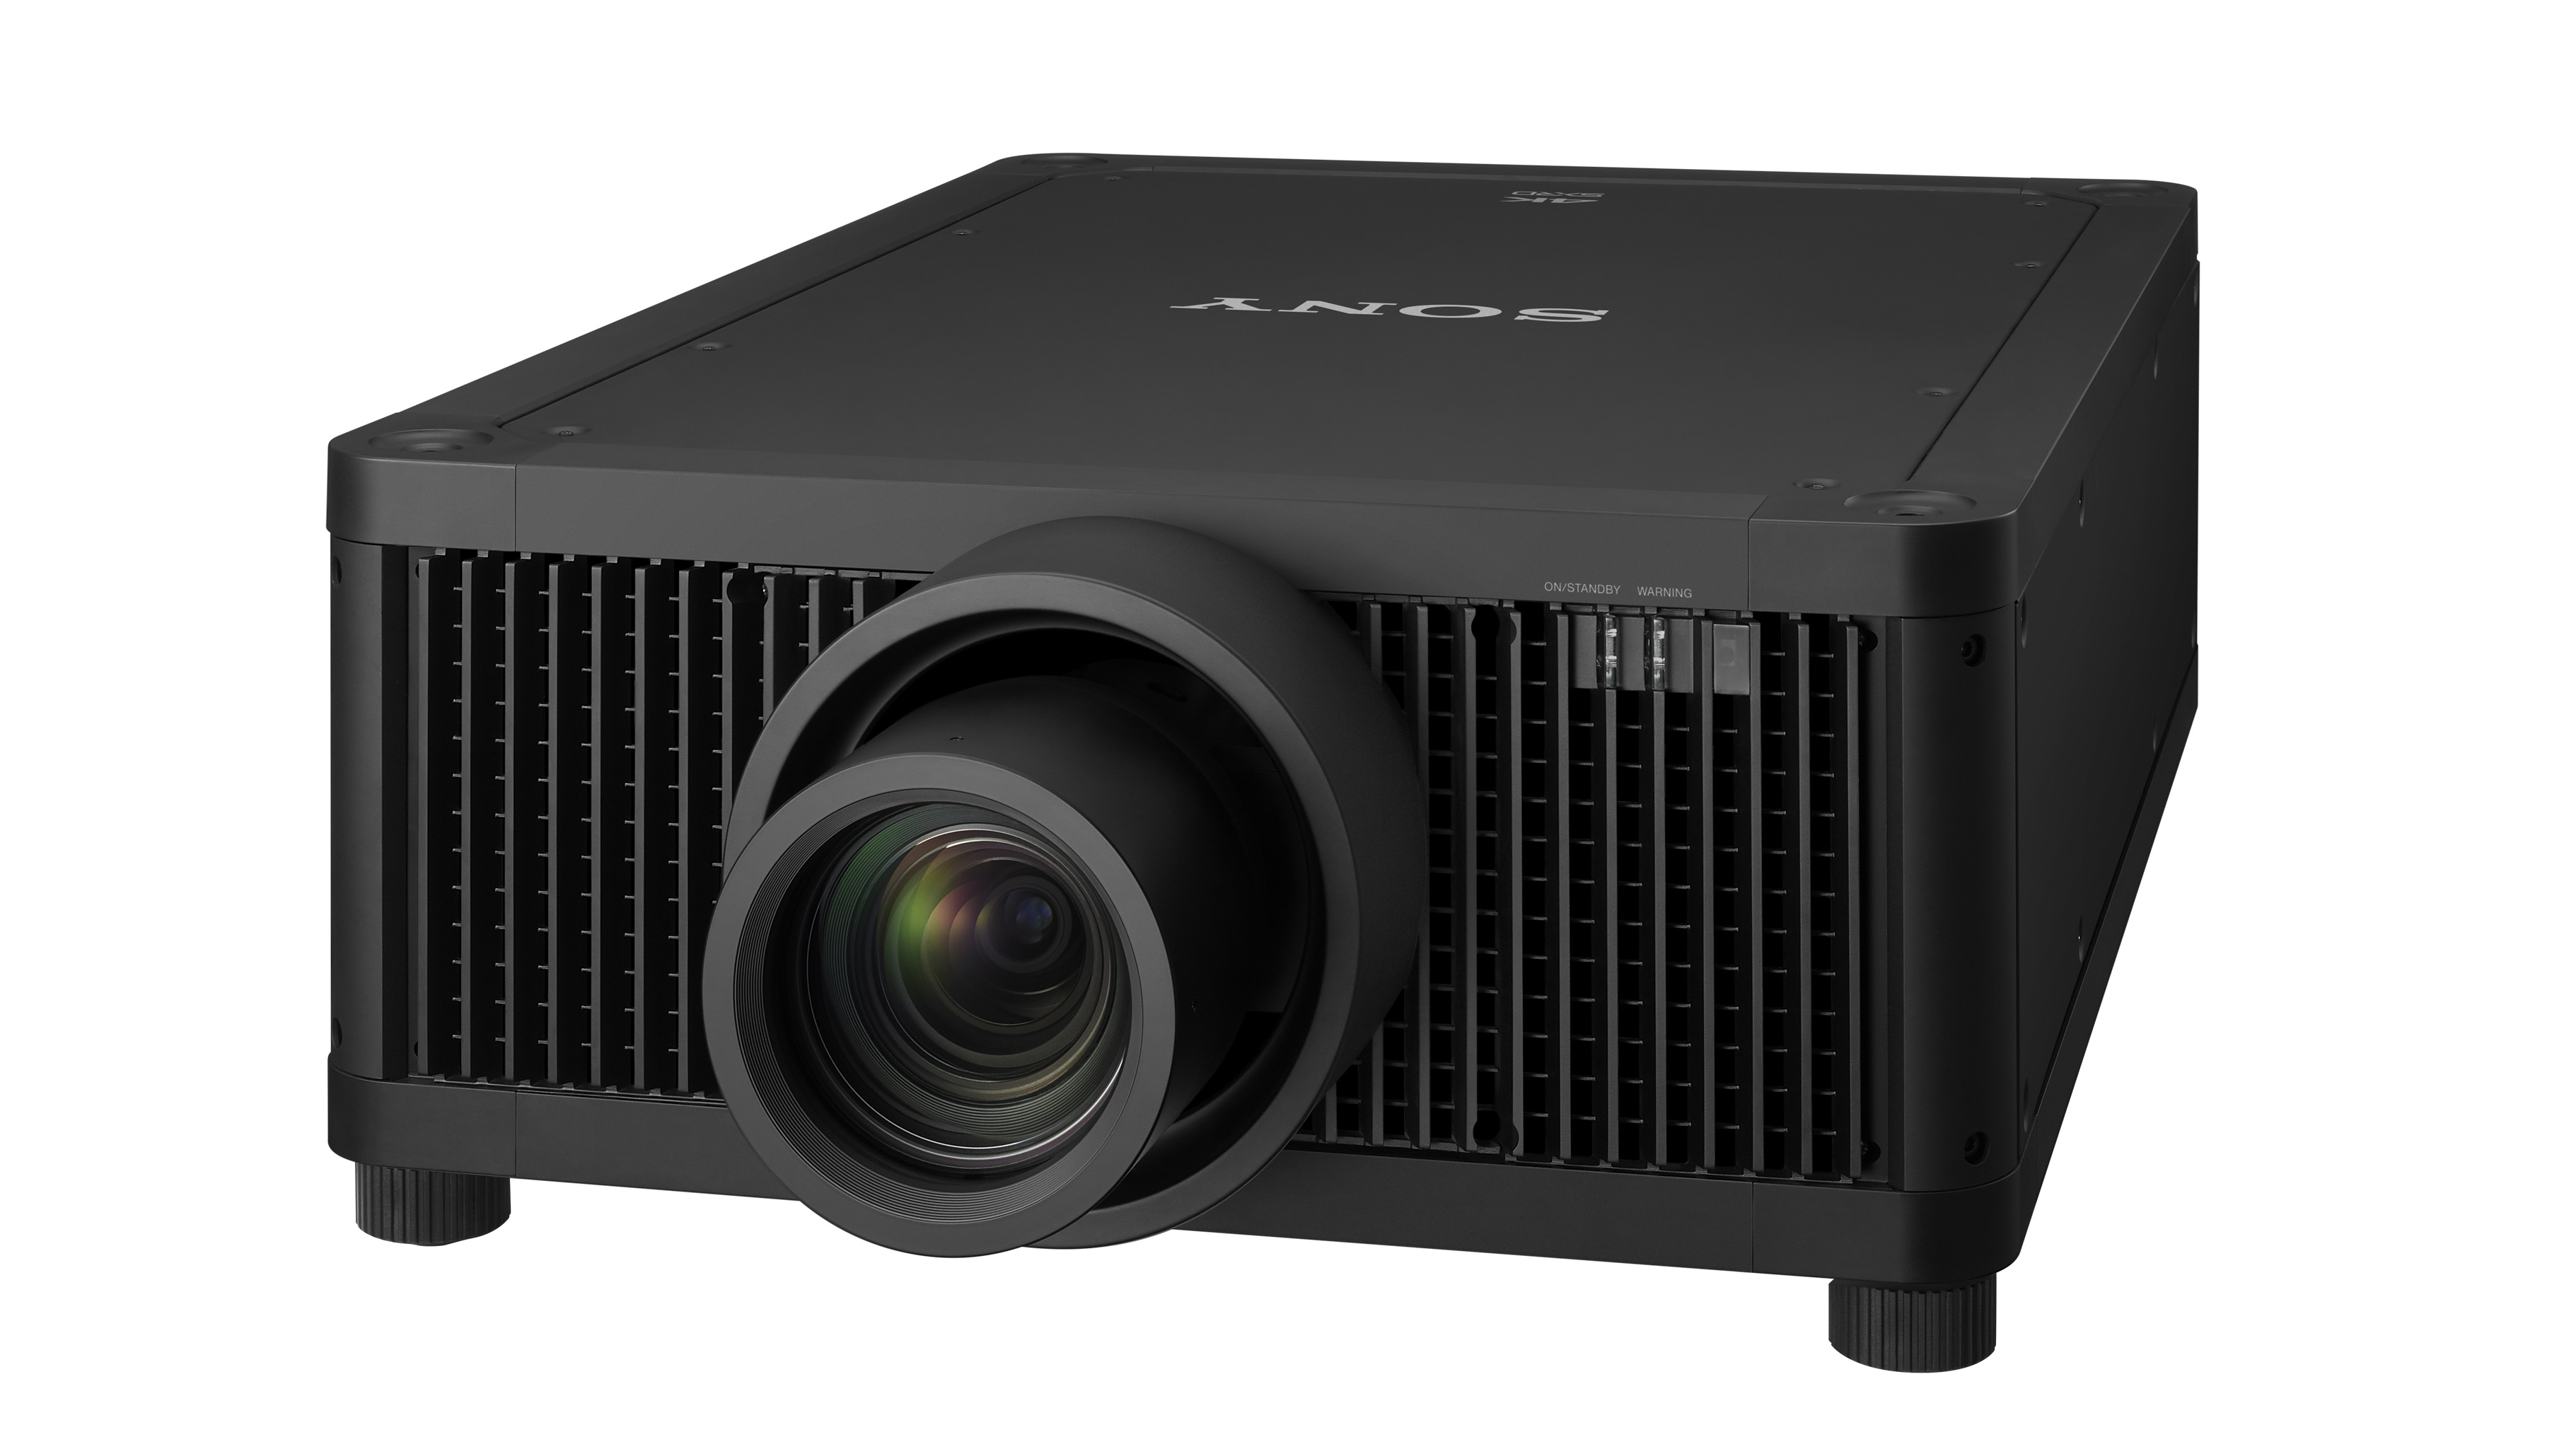 New Sony 4K projector hits 10,000 lumens for ‘OLEDlike HDR’ TechRadar